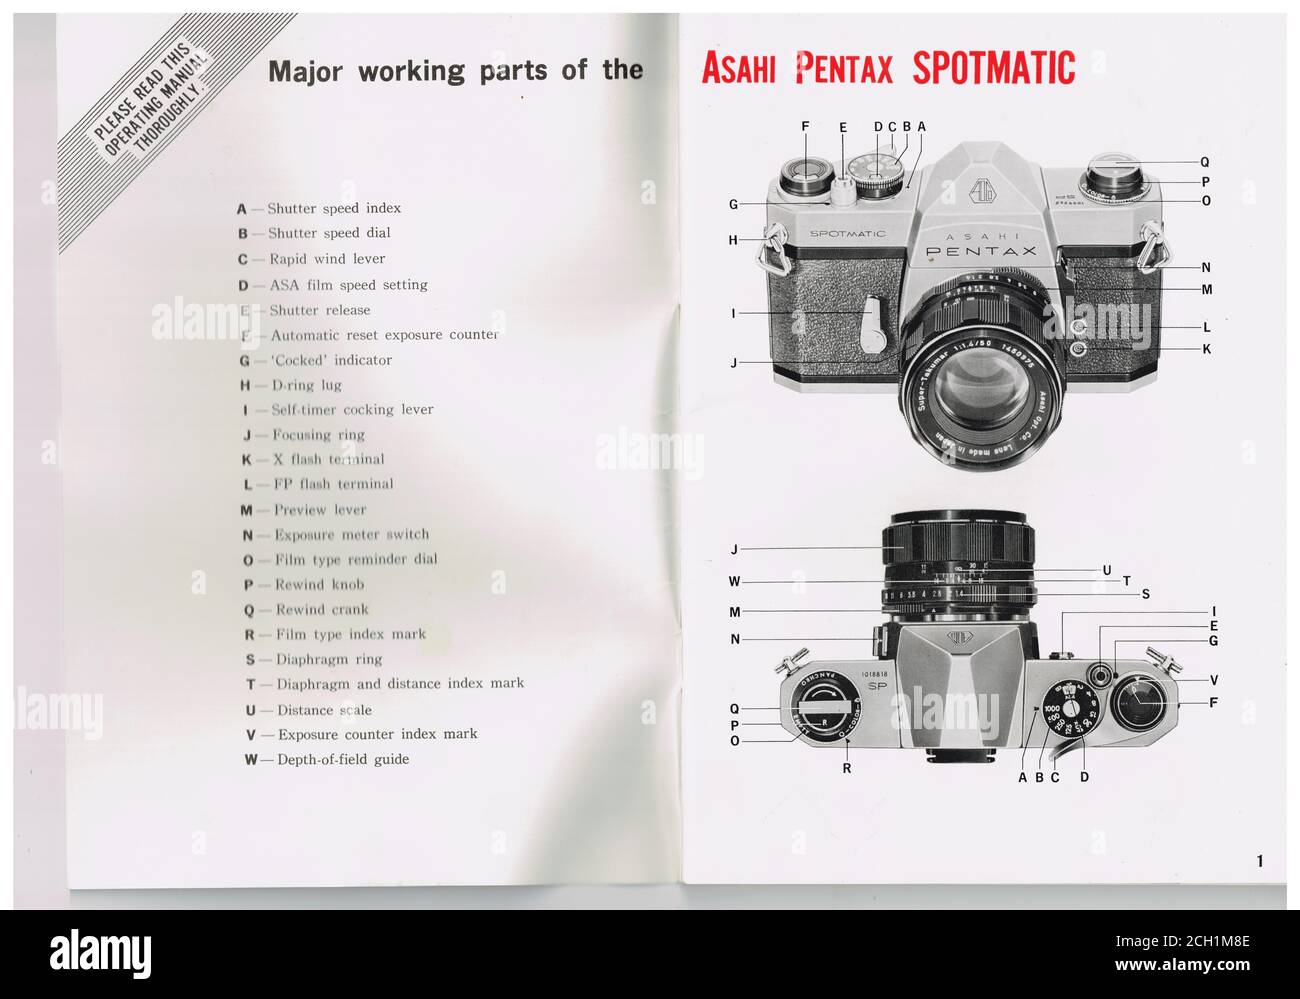 Asahi Pentax Spotmatic camera instruction manual, 1968, France Stock Photo  - Alamy